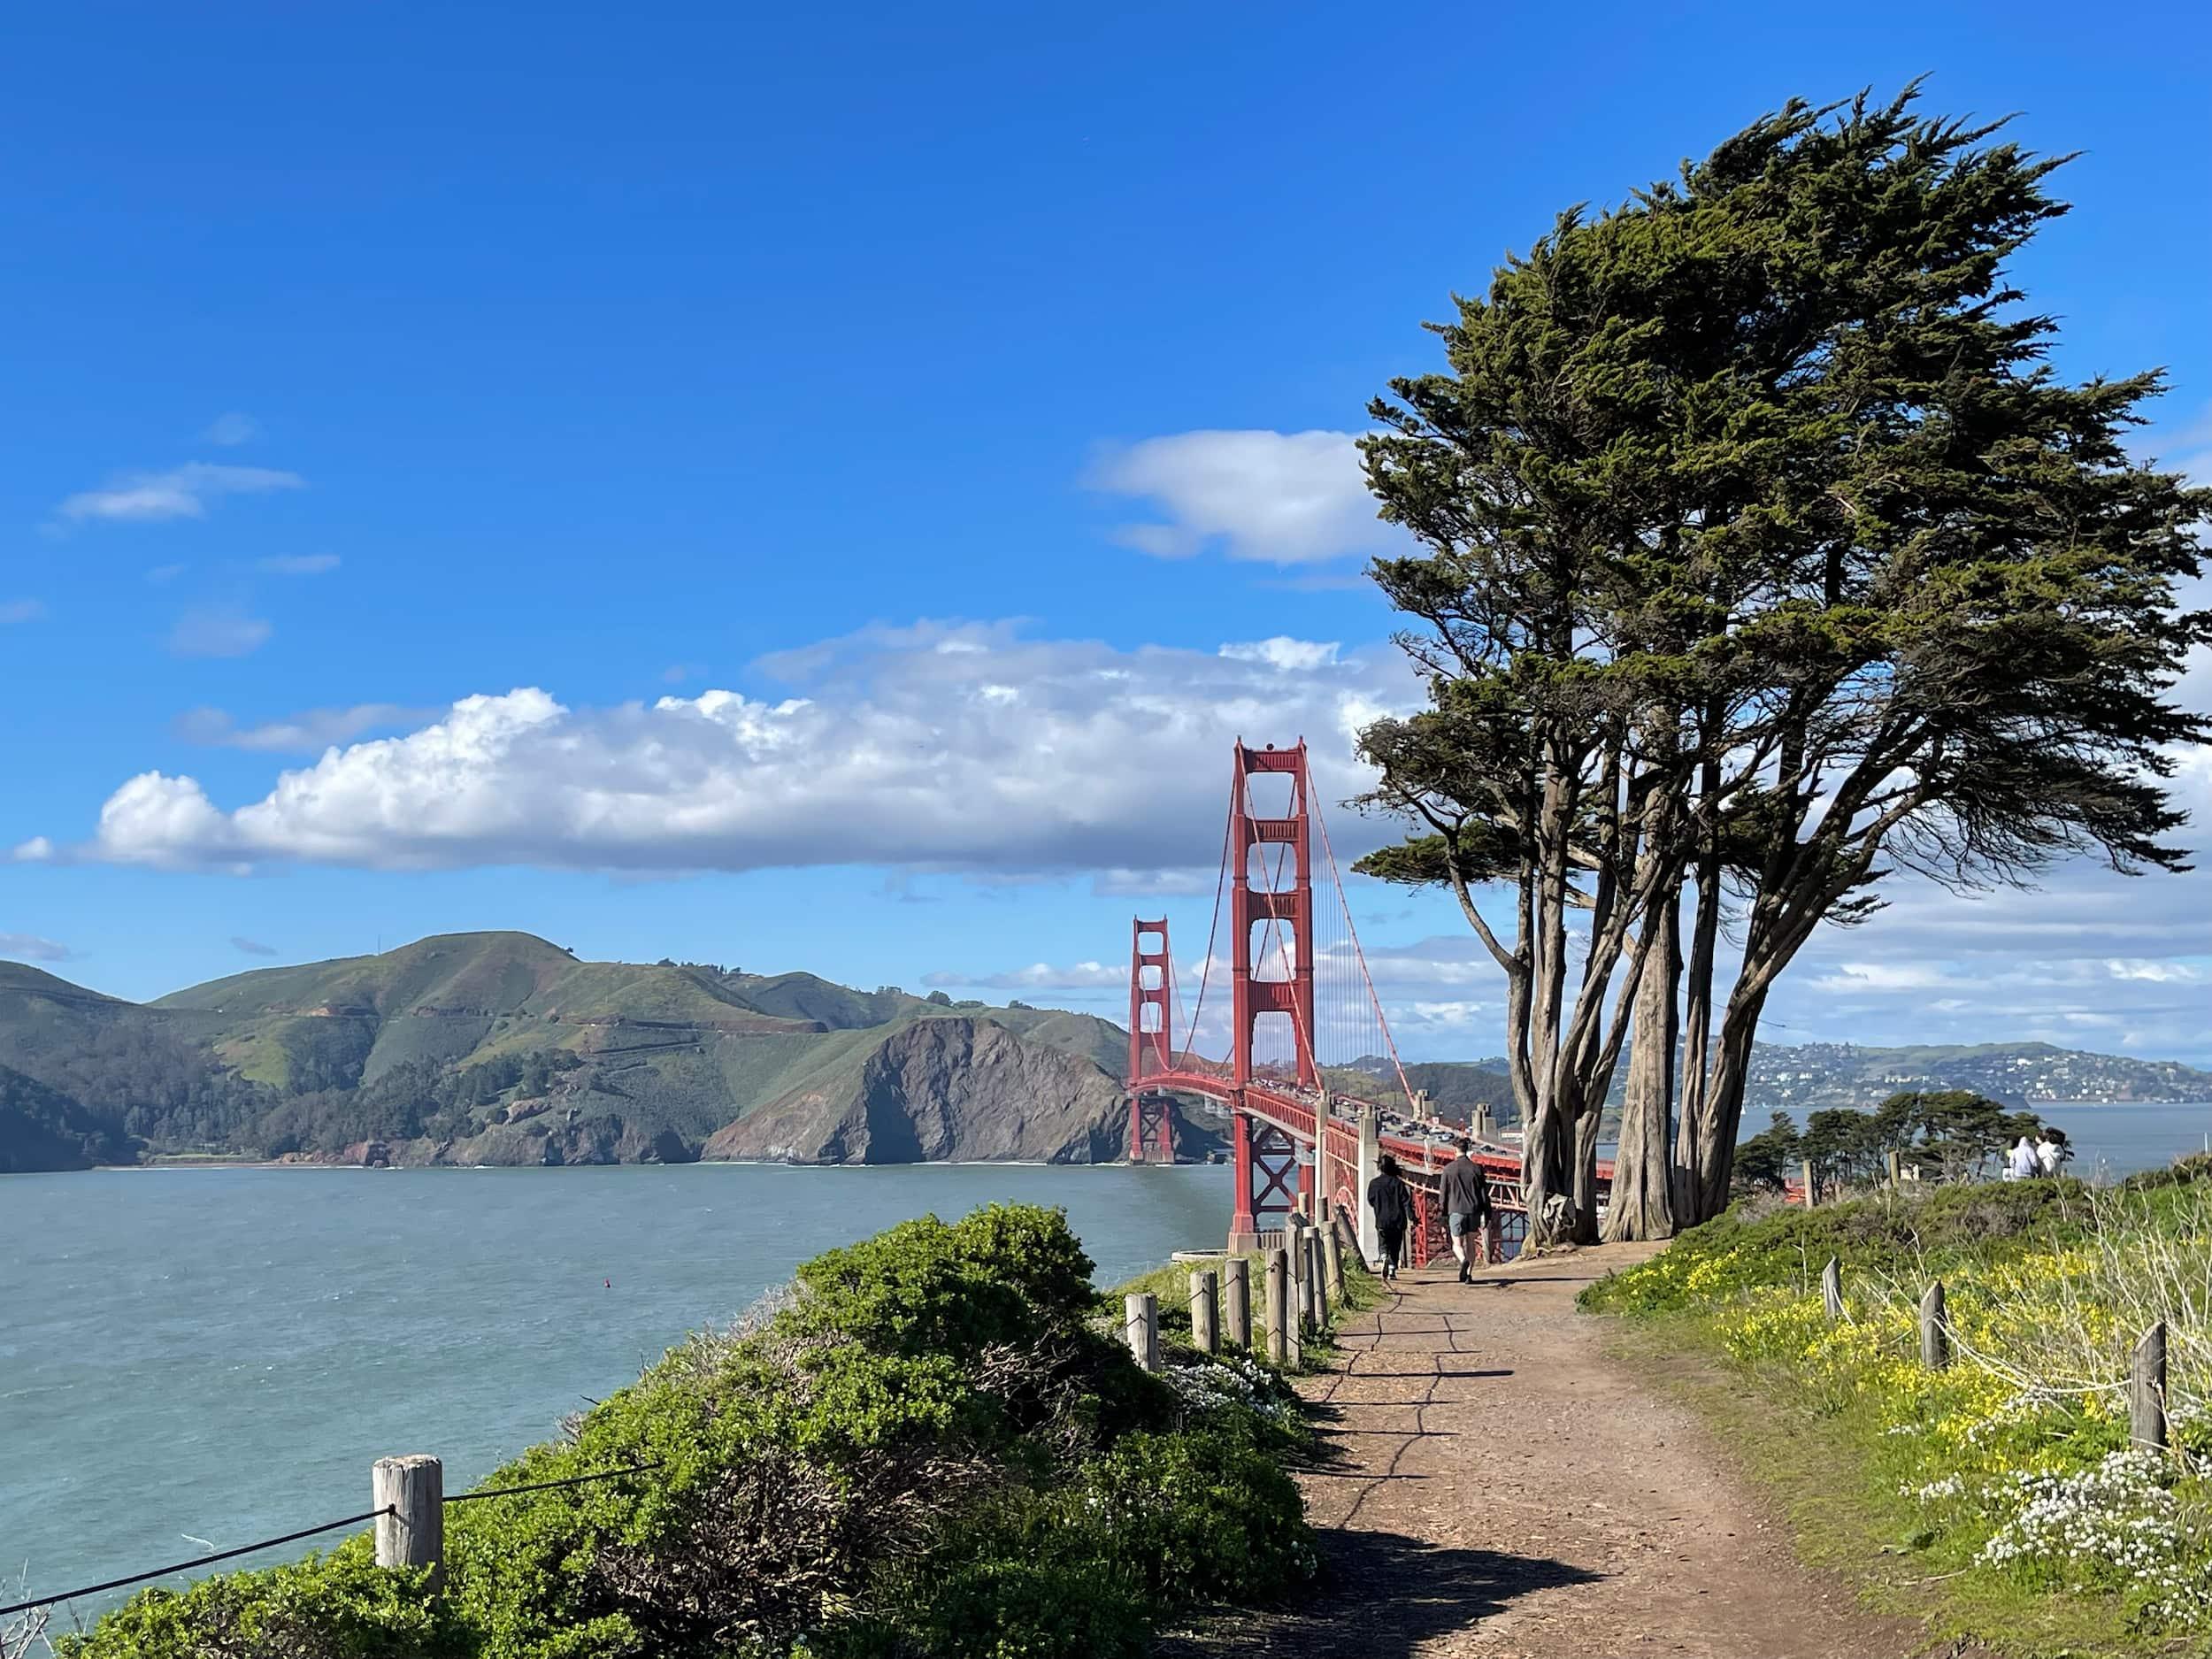 California Coastal Trail with the Golden Gate Bridge.